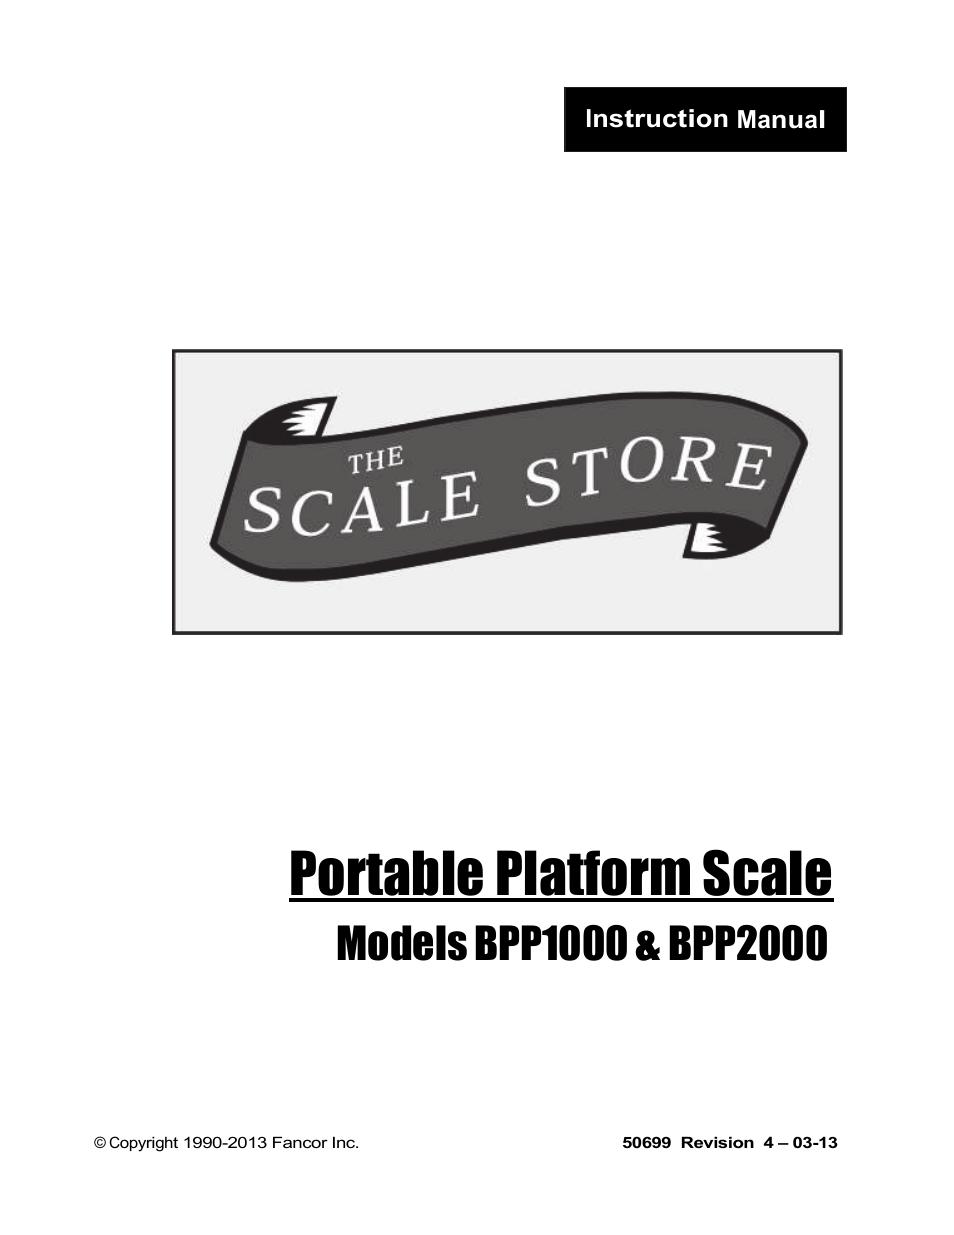 BPP2000 Portable Platform Scale